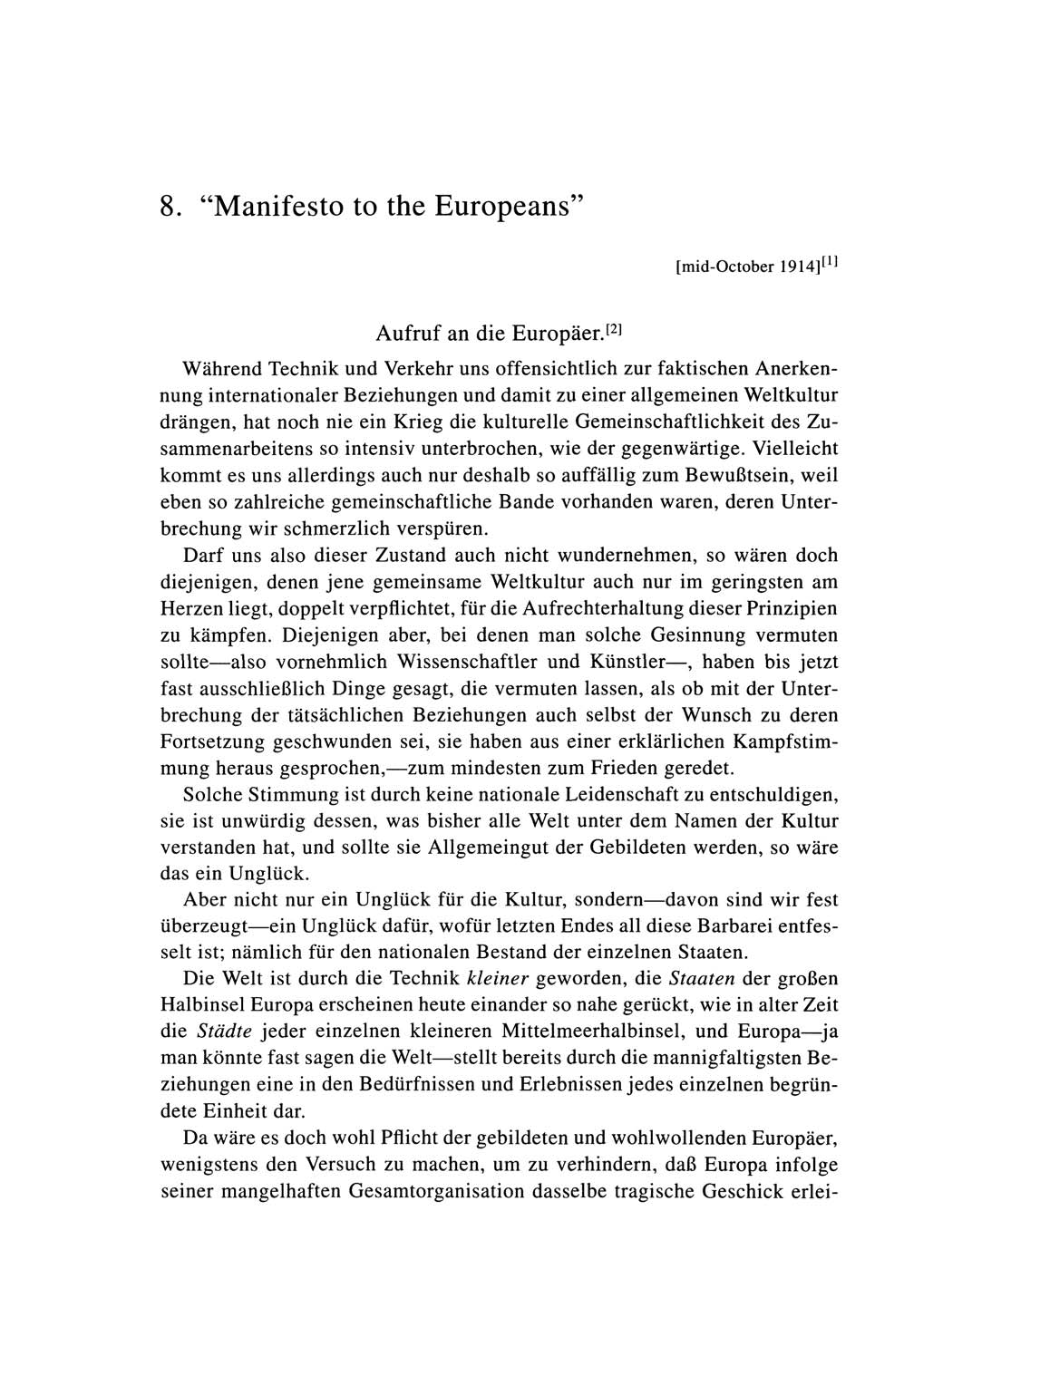 Volume 6: The Berlin Years: Writings, 1914-1917 page 69